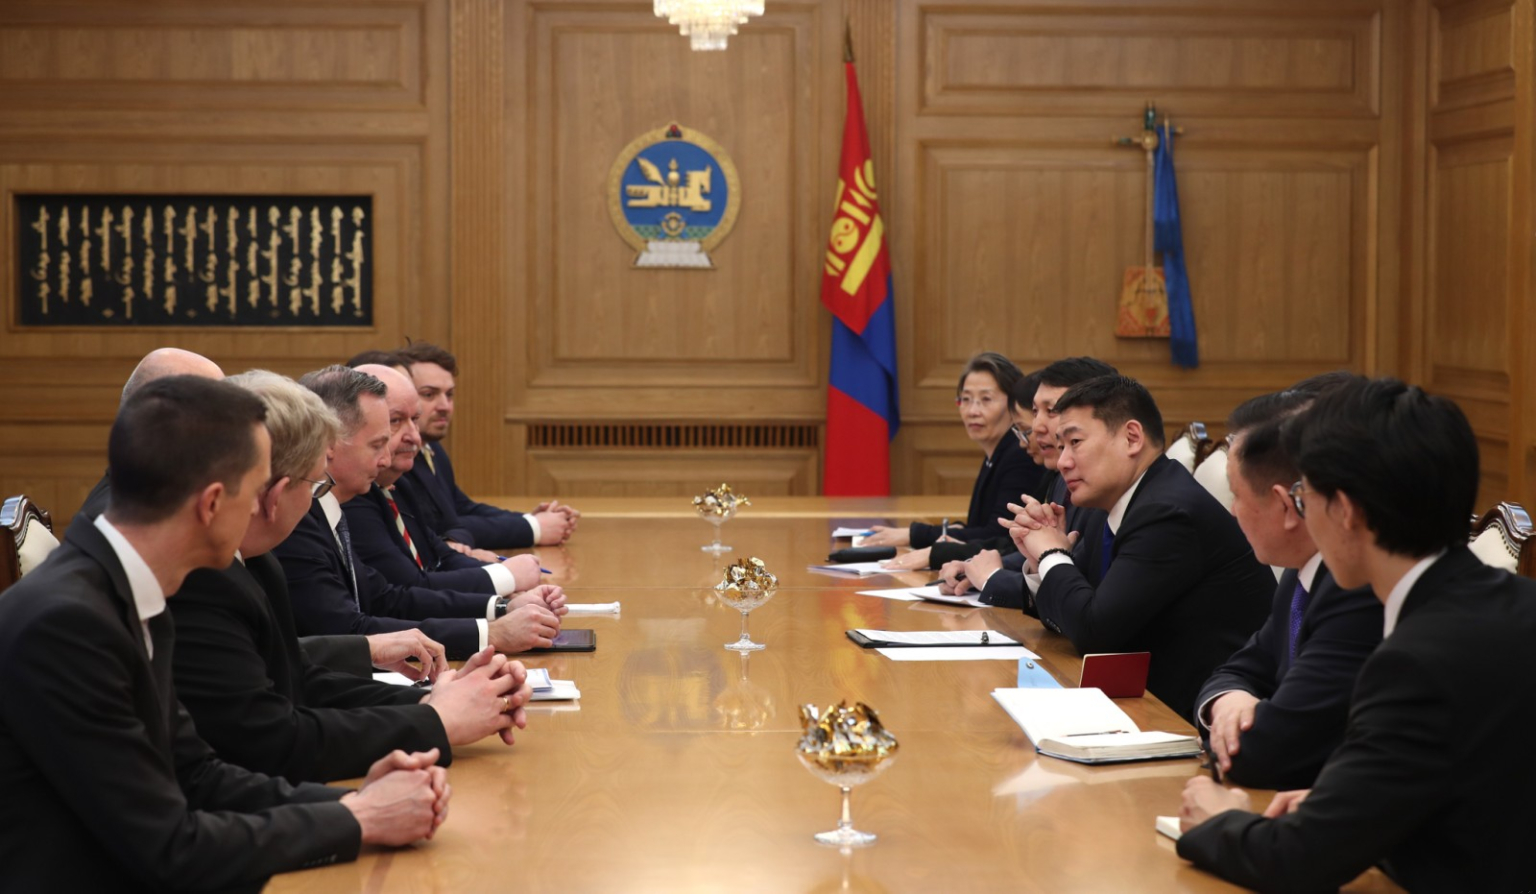 L.Oyun-Erdene首相がドイツのデジタル開発・道路運輸大臣と会談した